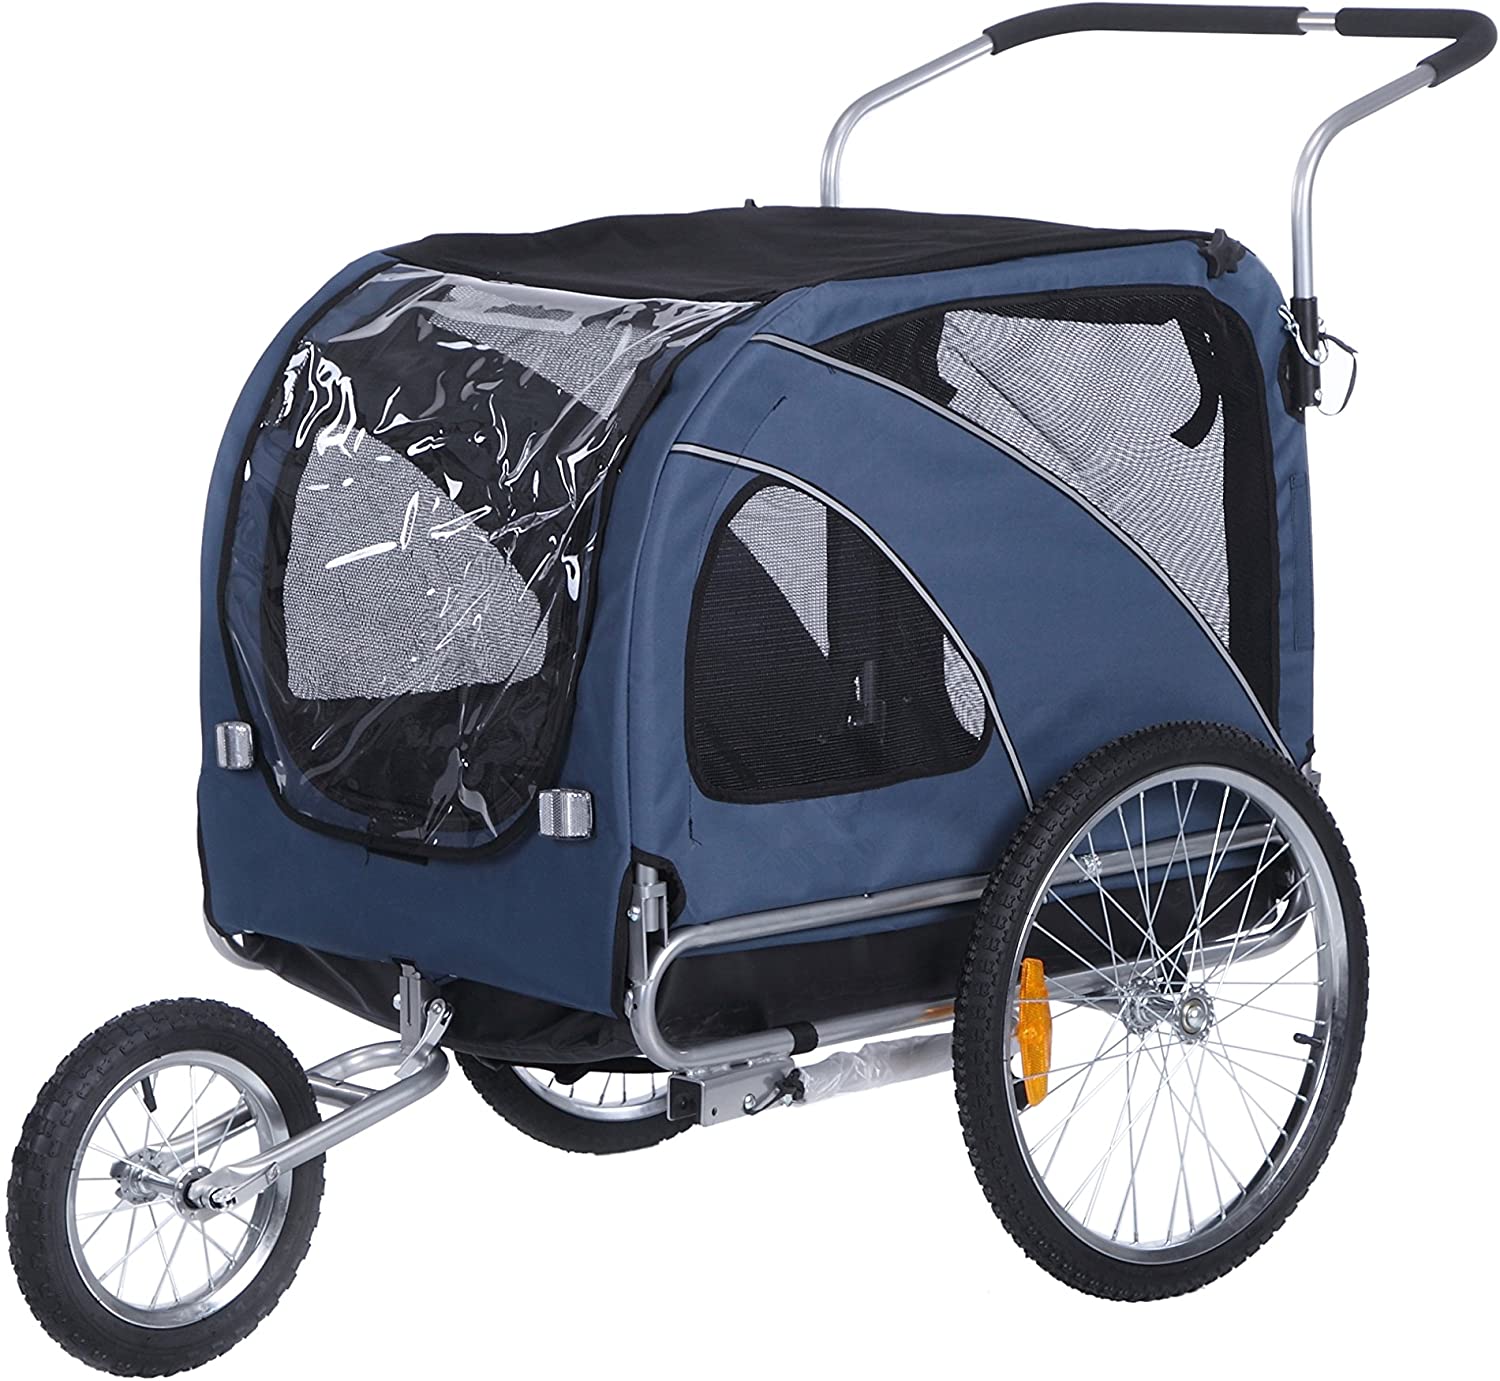  leonpets 2 en 1 mascotas Carrito de transporte para Jogger/remolque de bicicleta 10202 (Azul) 